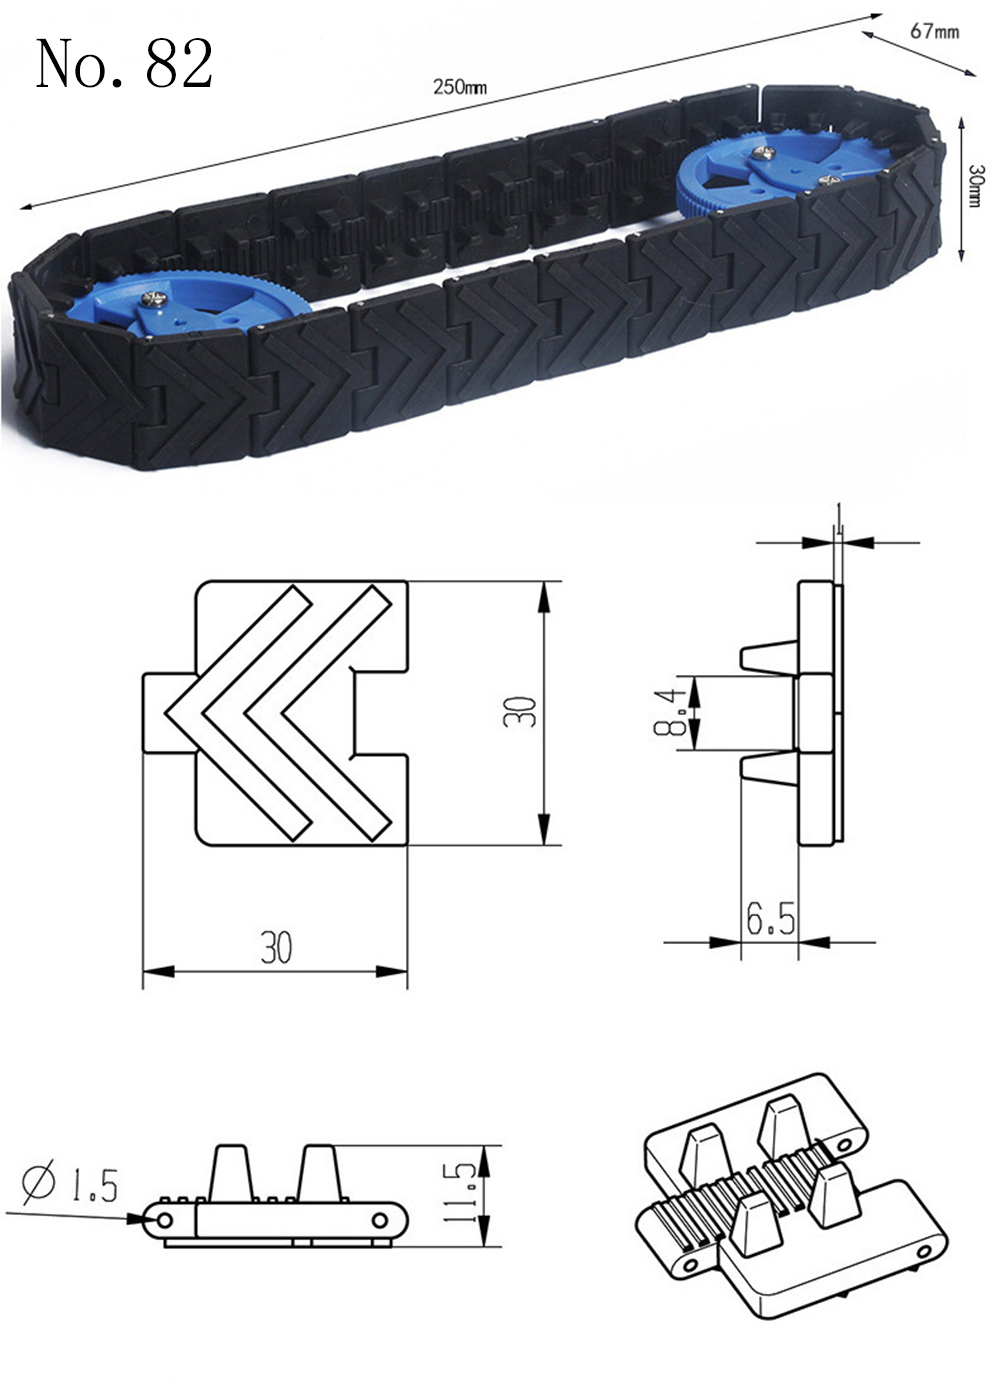 DIY-Plastic-RC-Tank-Crawler-Belt-Track-RC-Robot-Part-1390392-5